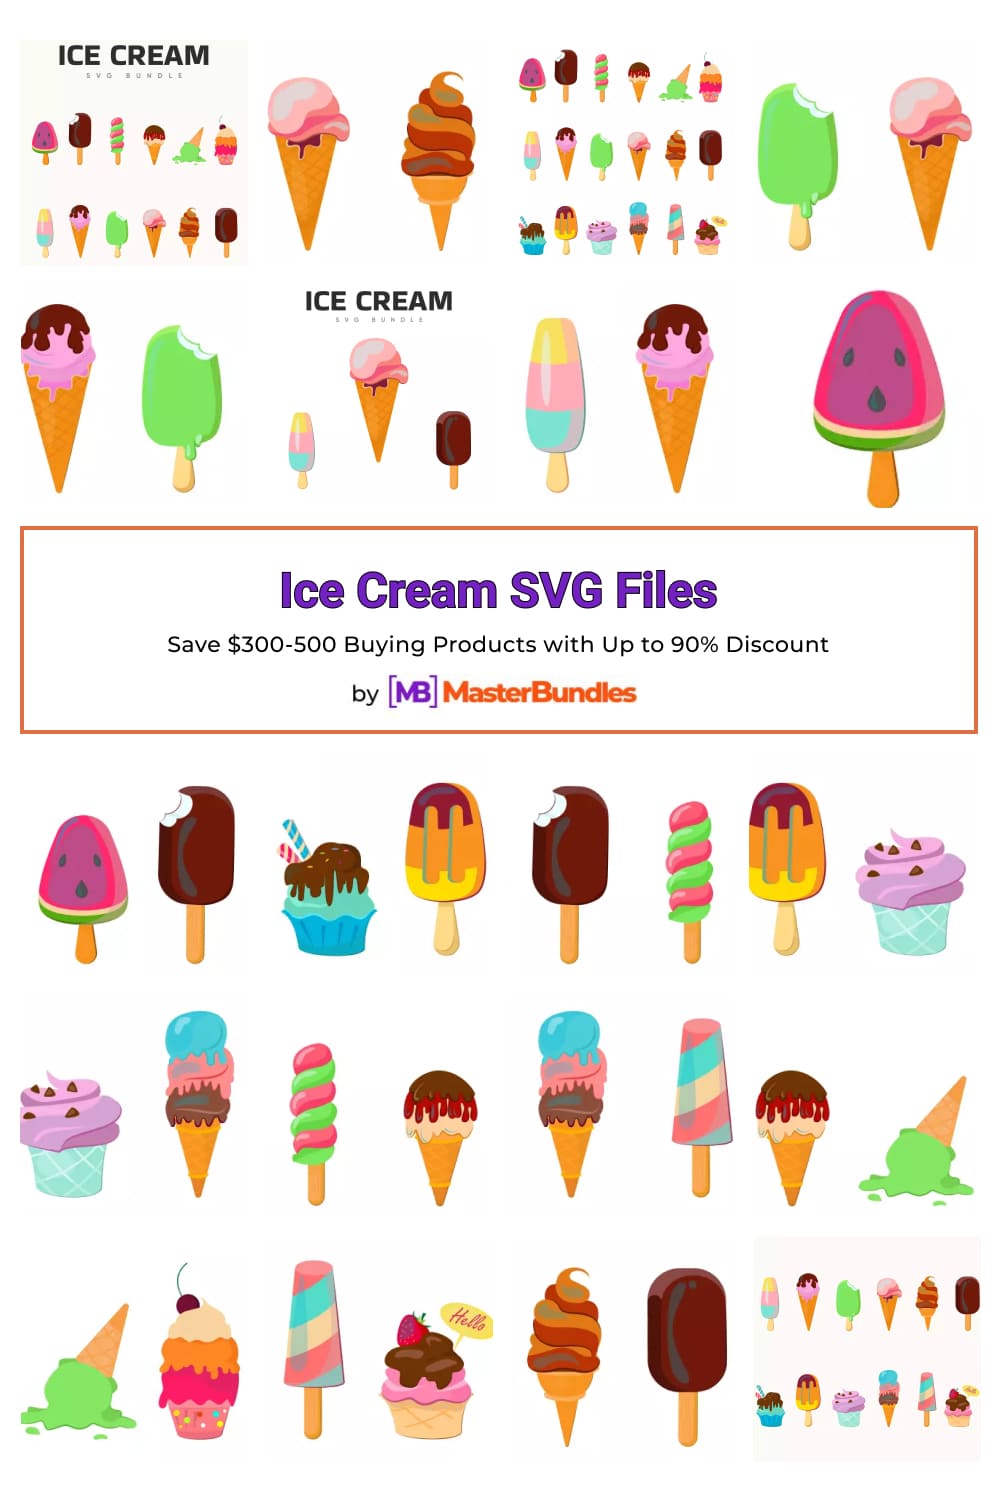 Ice Cream SVG Files Pinterest image.